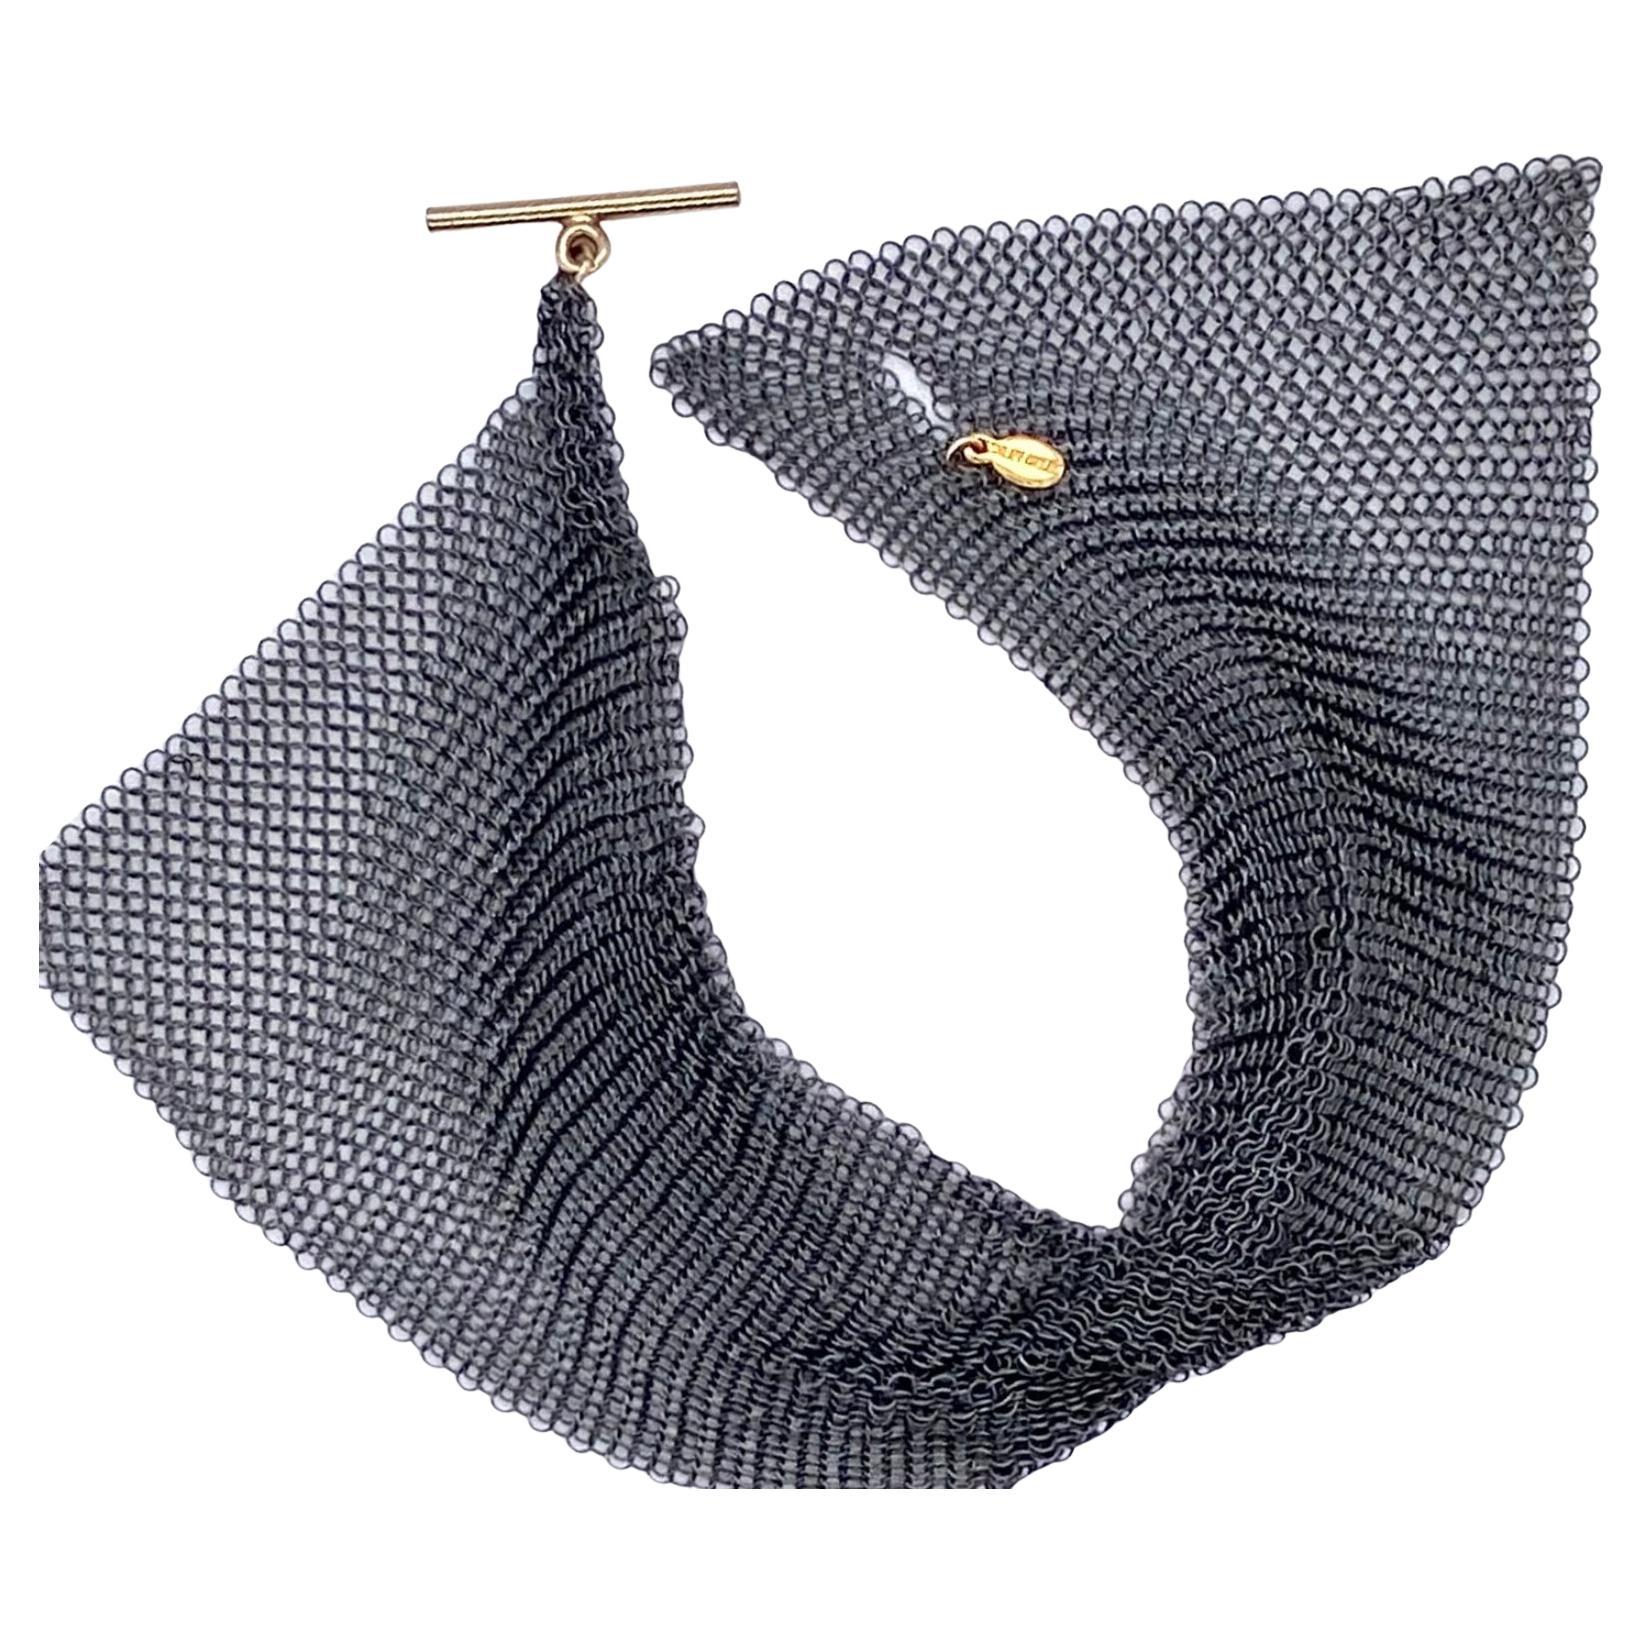 Armband aus oxidiertem Sterlingsilber mit ovalem, skulpturalem Kettenhemd